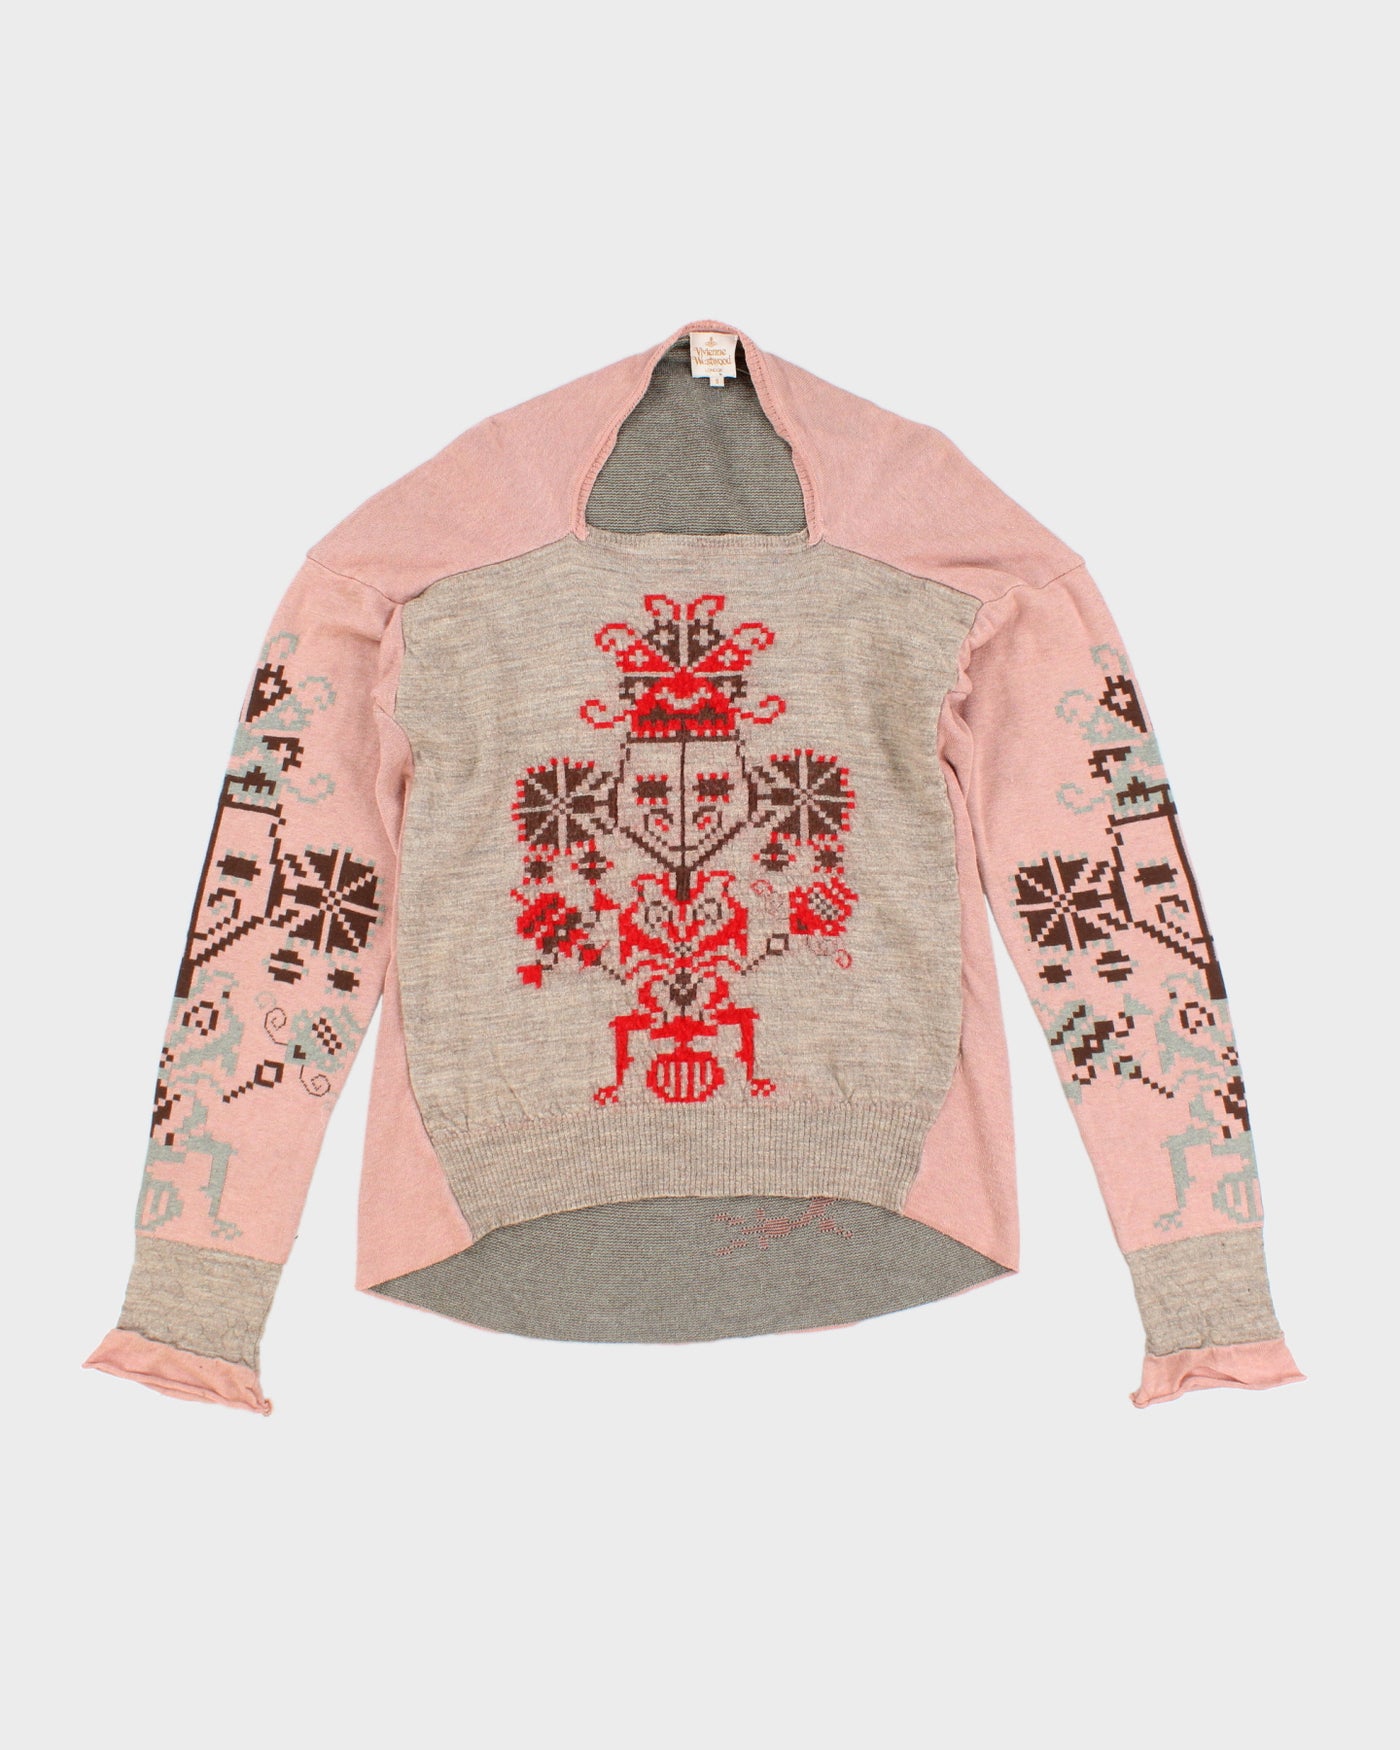 Vivienne Westwood Pink & Beige Wool Knit Oversize Sweatshirt - S